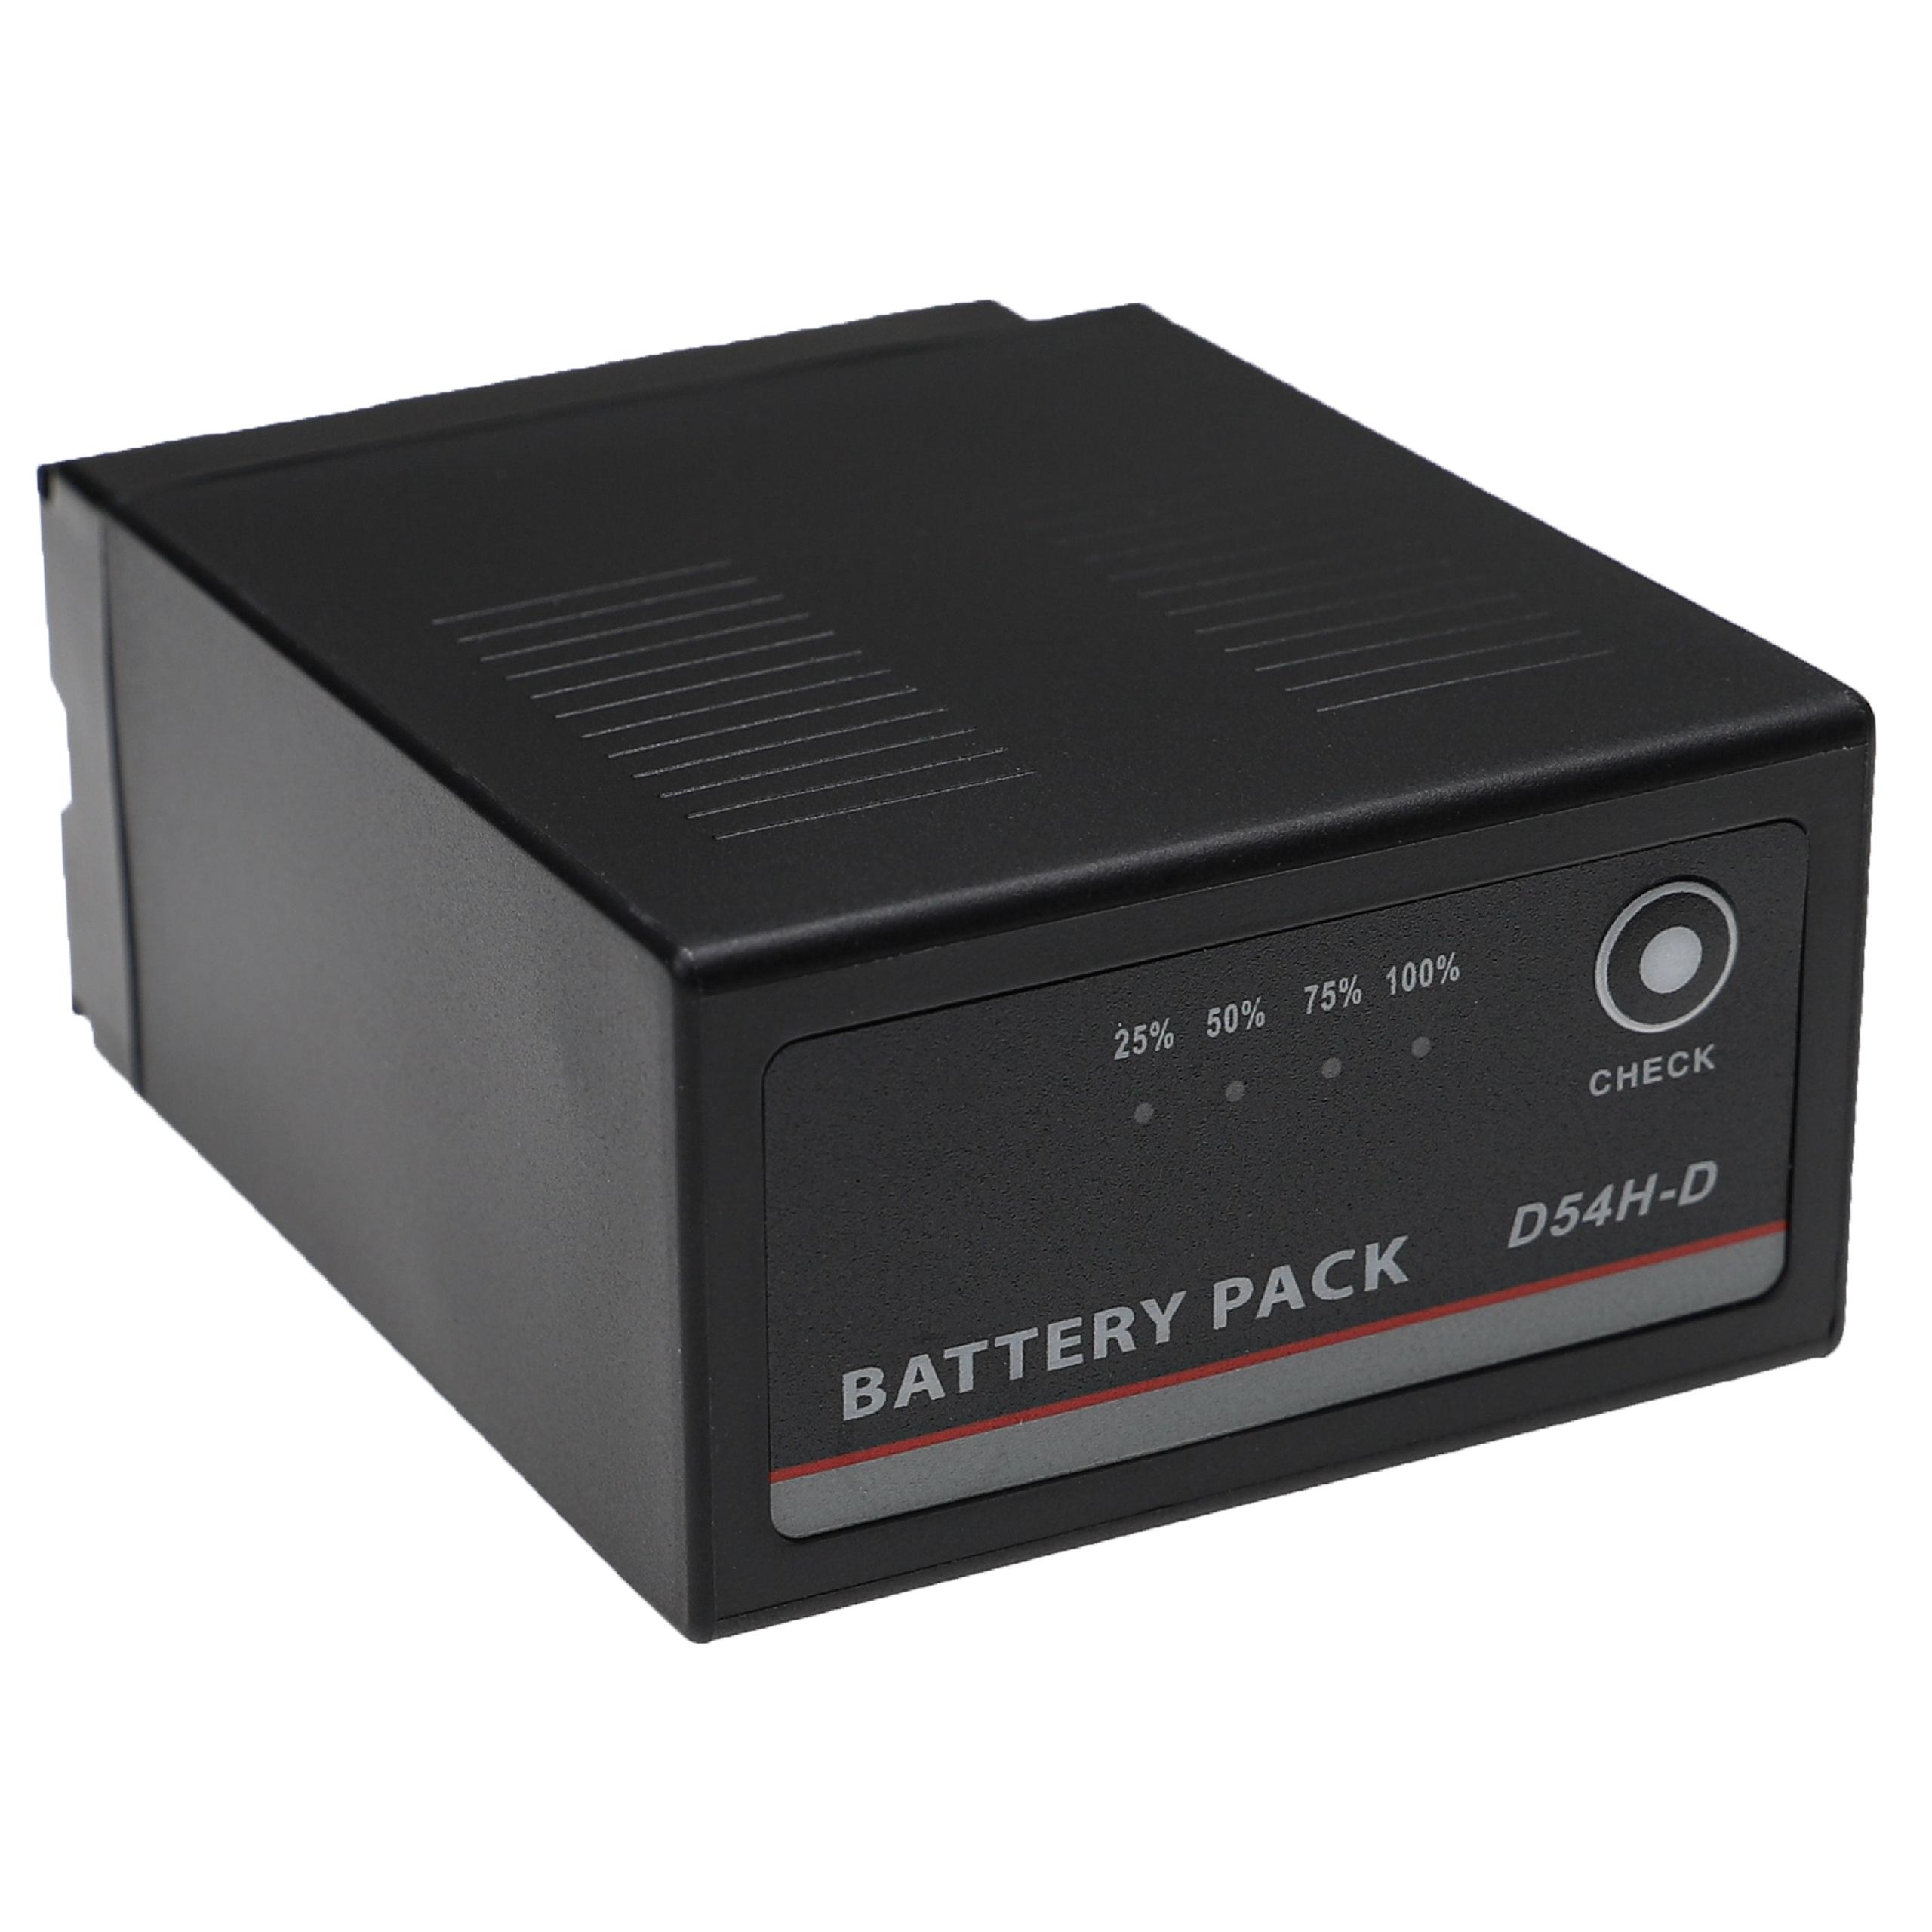 Videocamera Battery Replacement for Hitachi DZ-BP28, DZ-BP16 - 7800mAh 7.4V Li-Ion